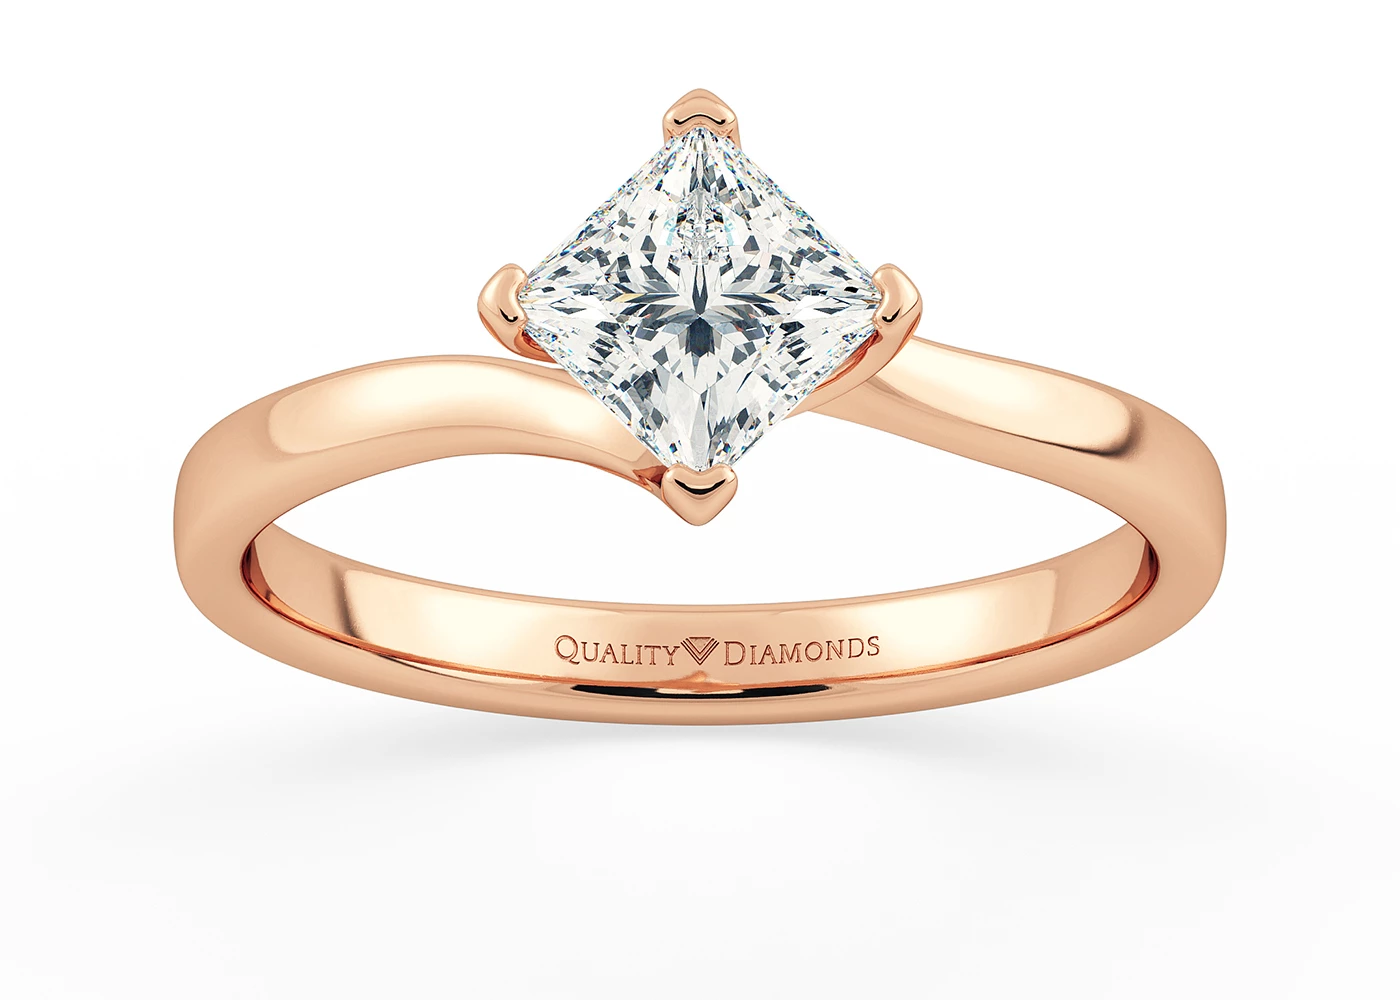 Princess Cura Diamond Ring in 18K Rose Gold